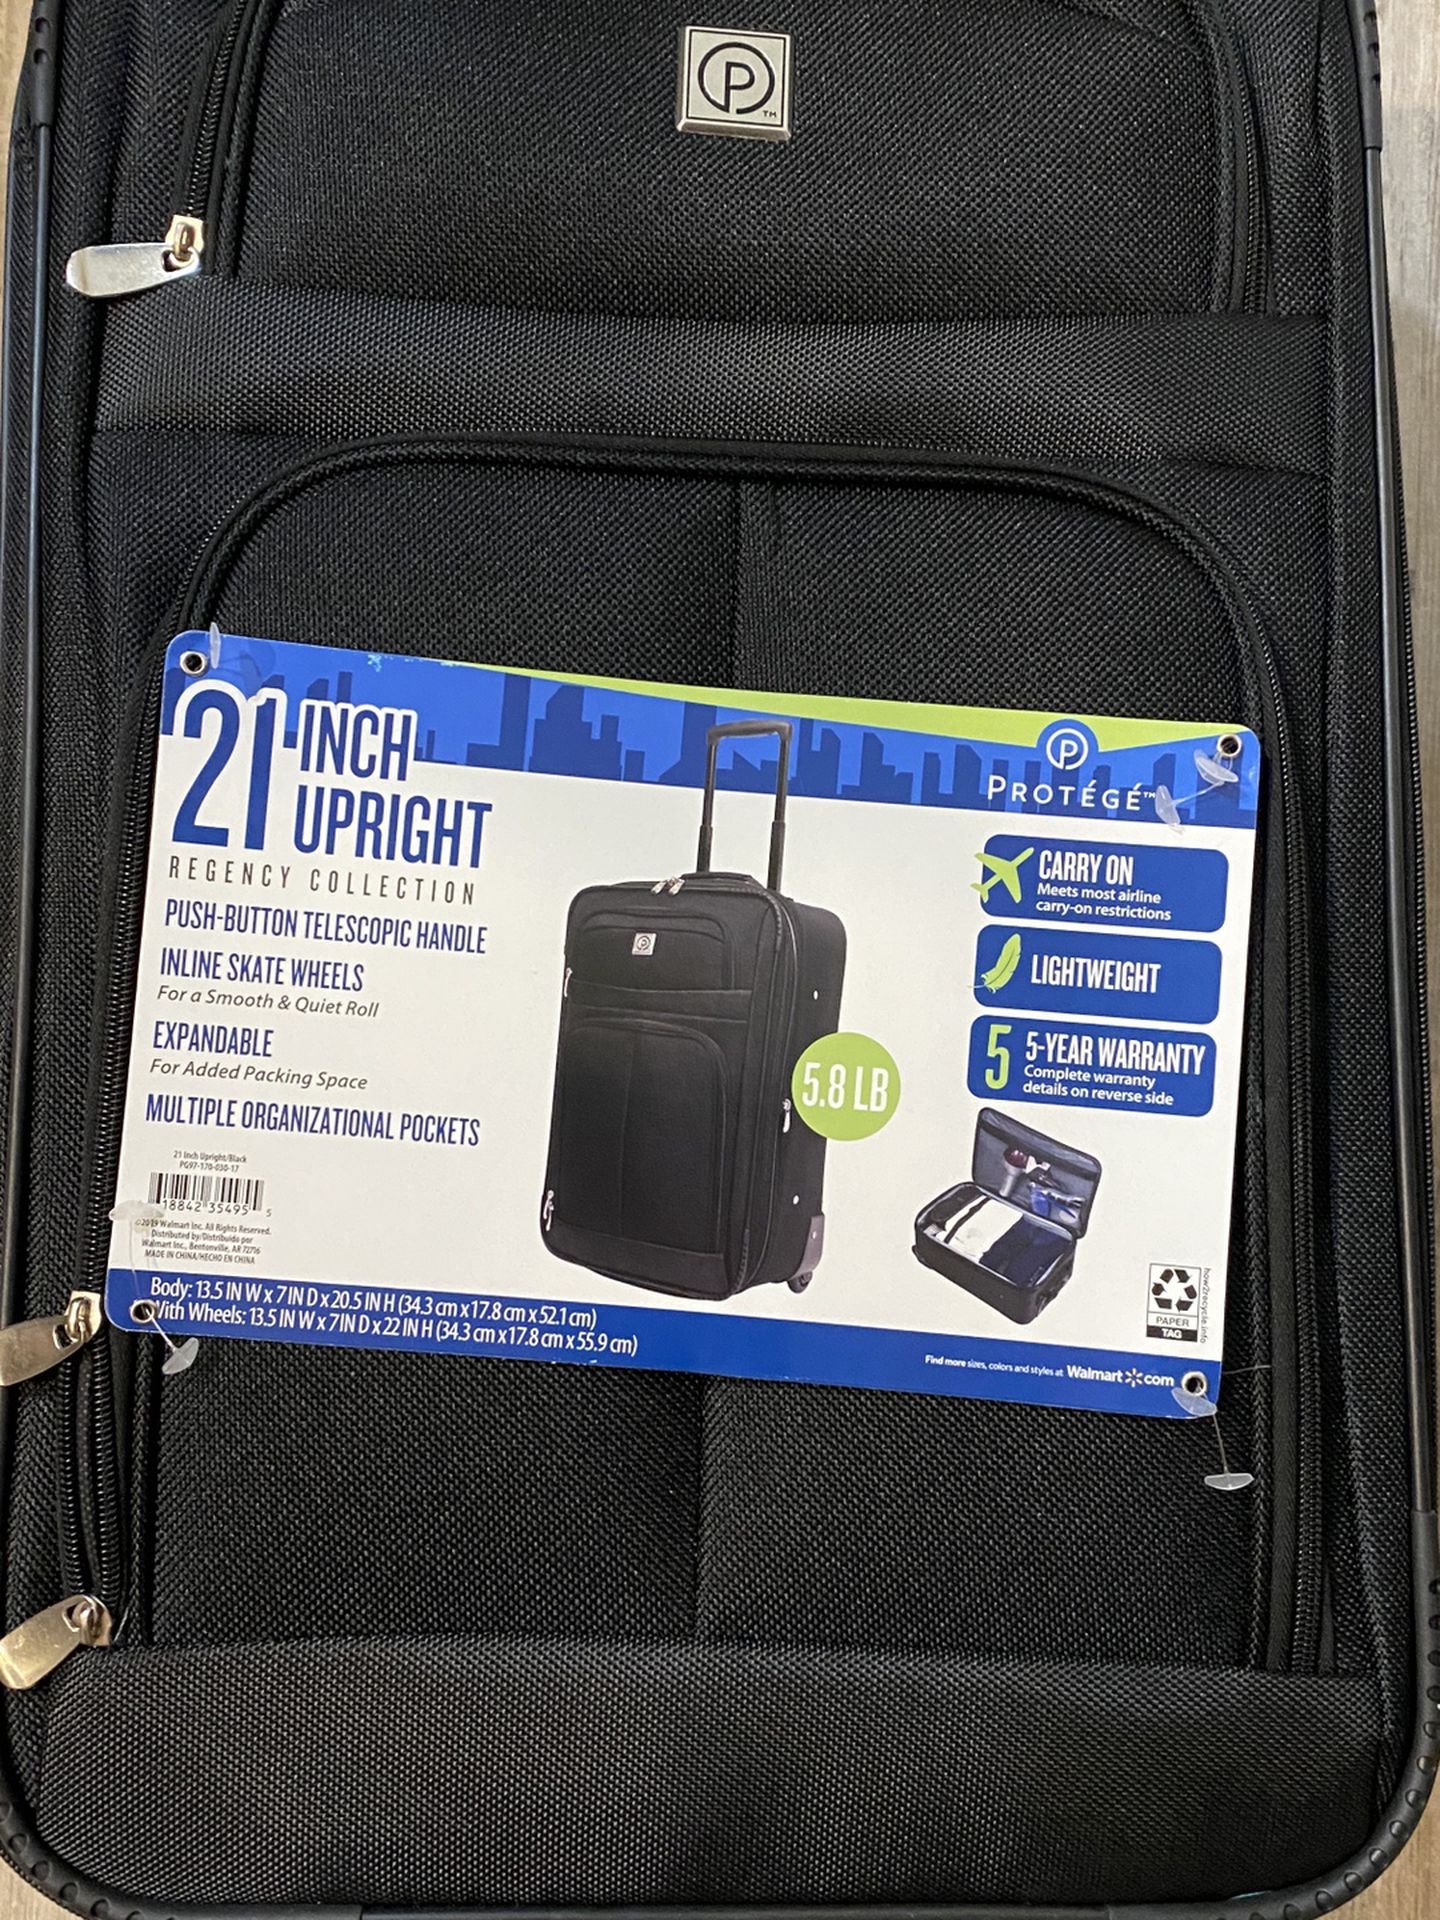 Protege 21’ Upright Carryon Bag